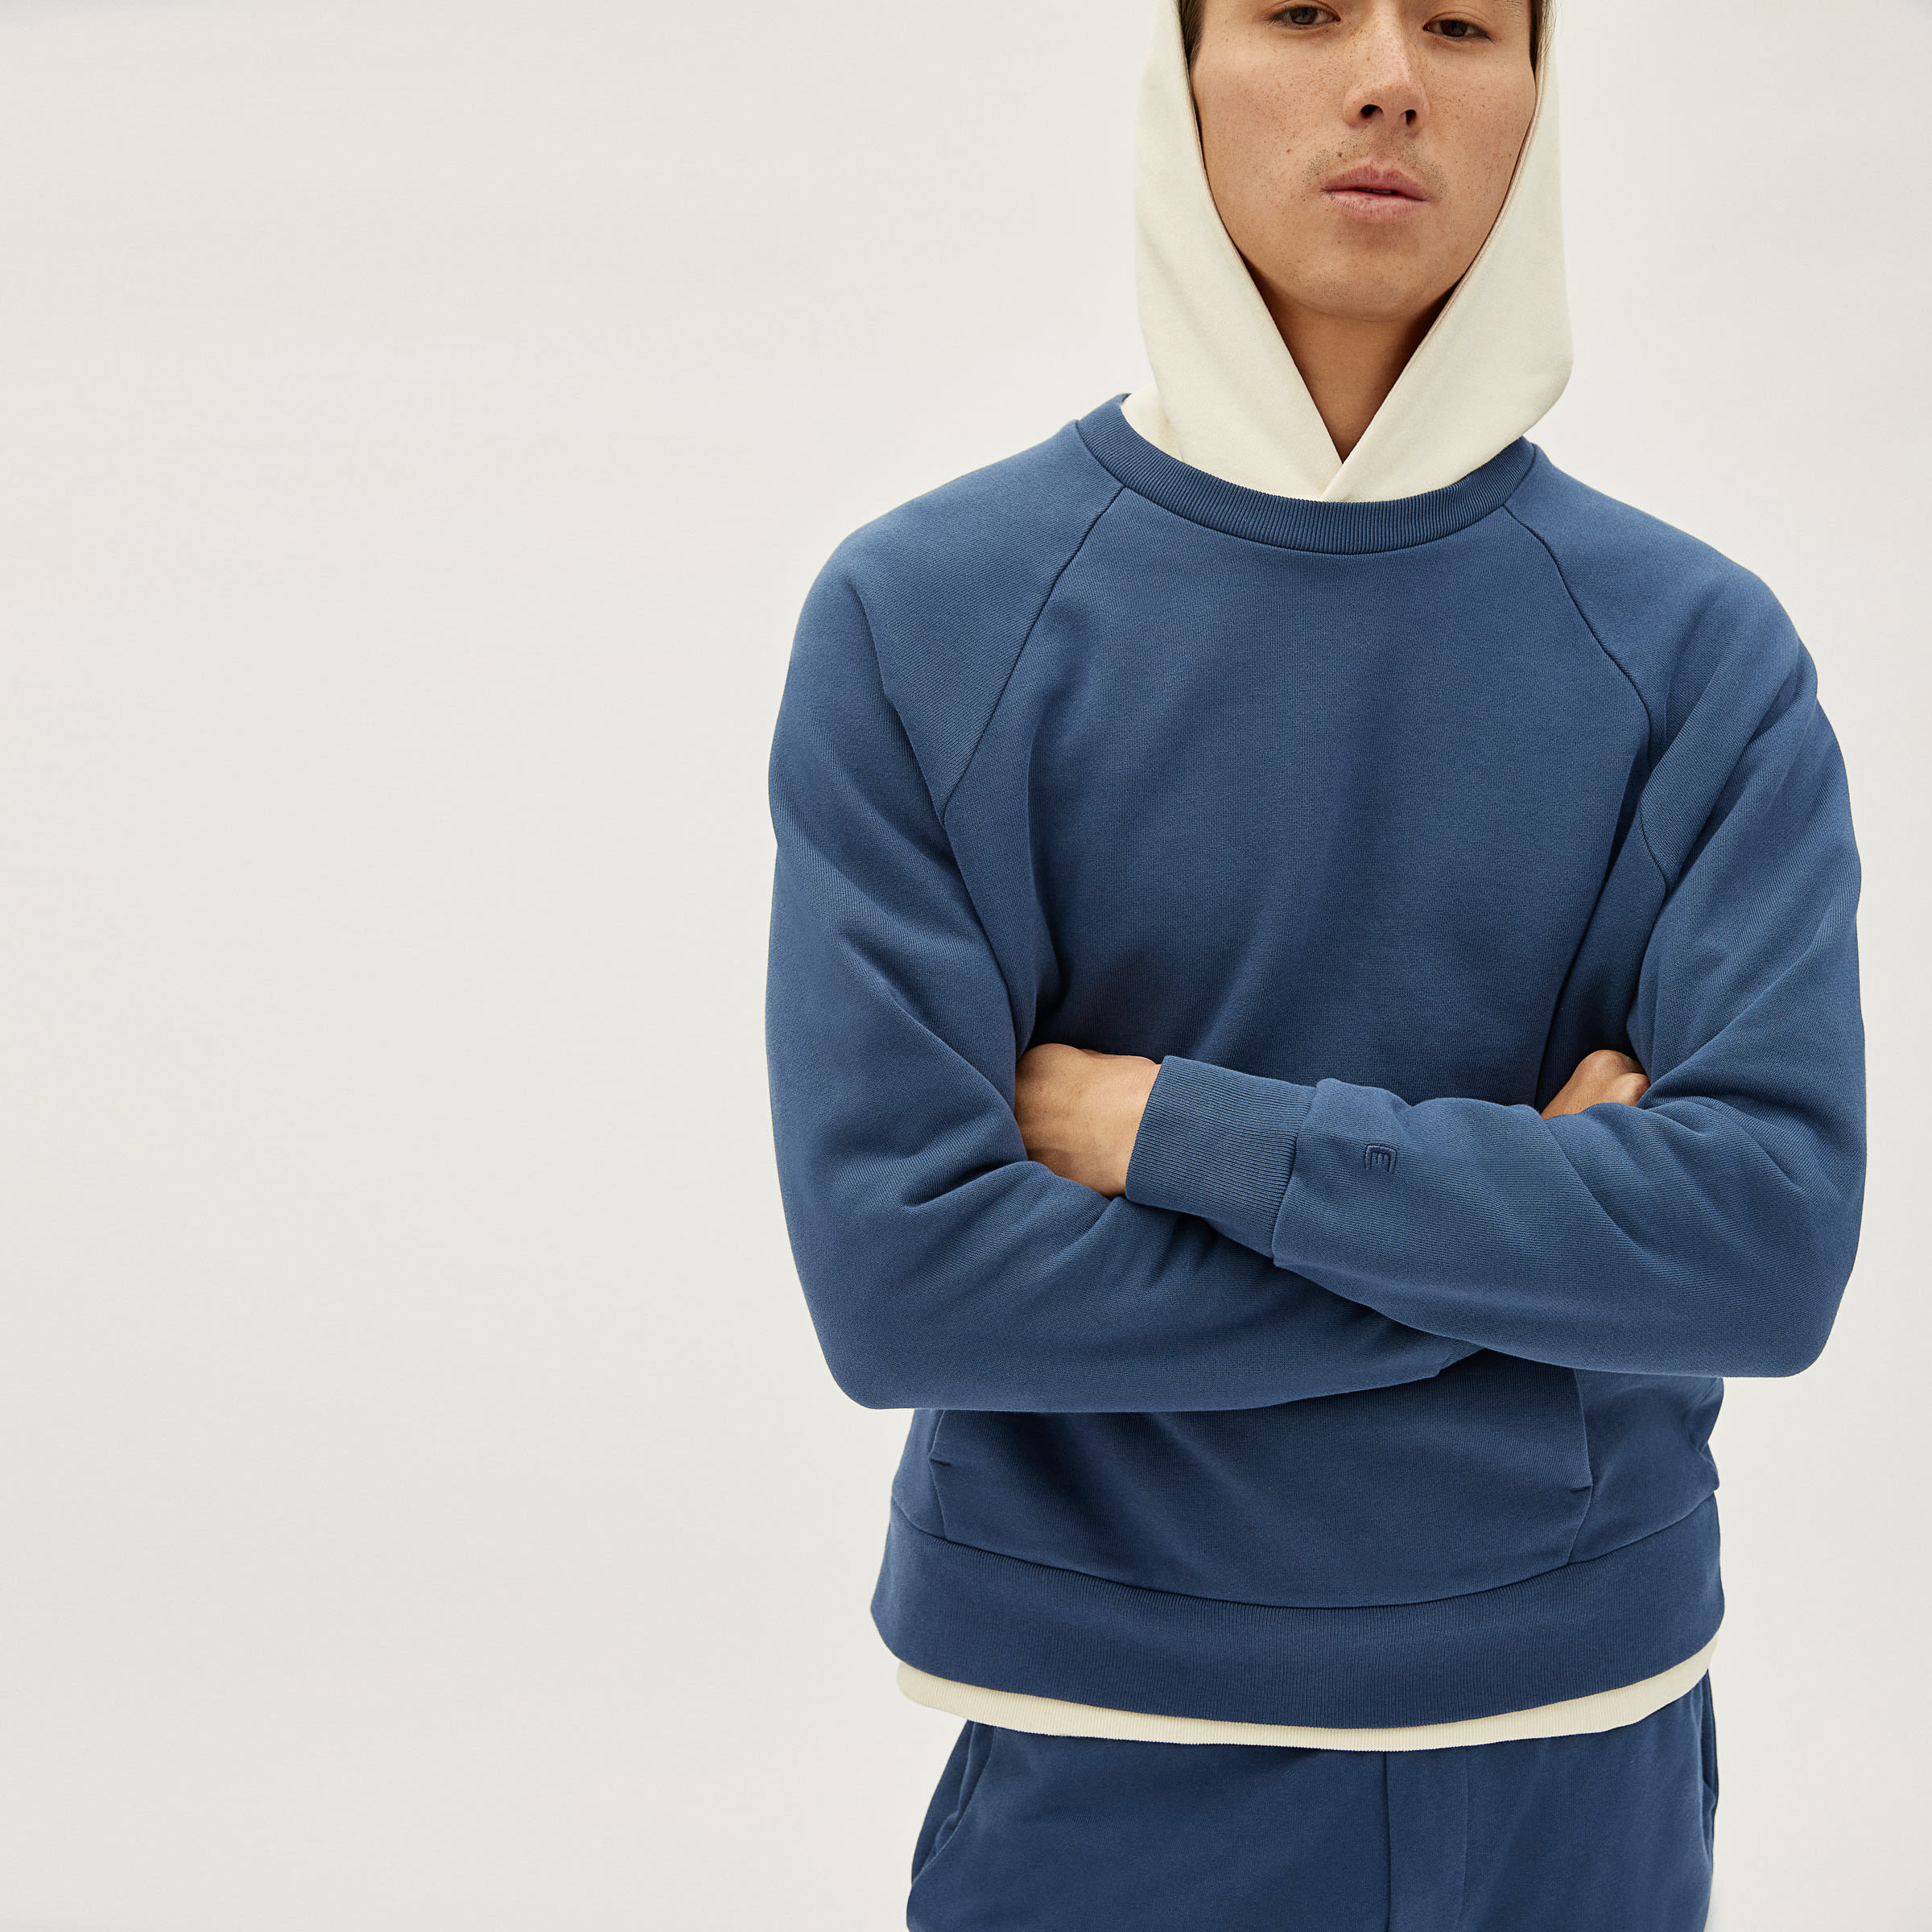 Navy Blue S Native World sweatshirt discount 94% MEN FASHION Jumpers & Sweatshirts Hoodless 